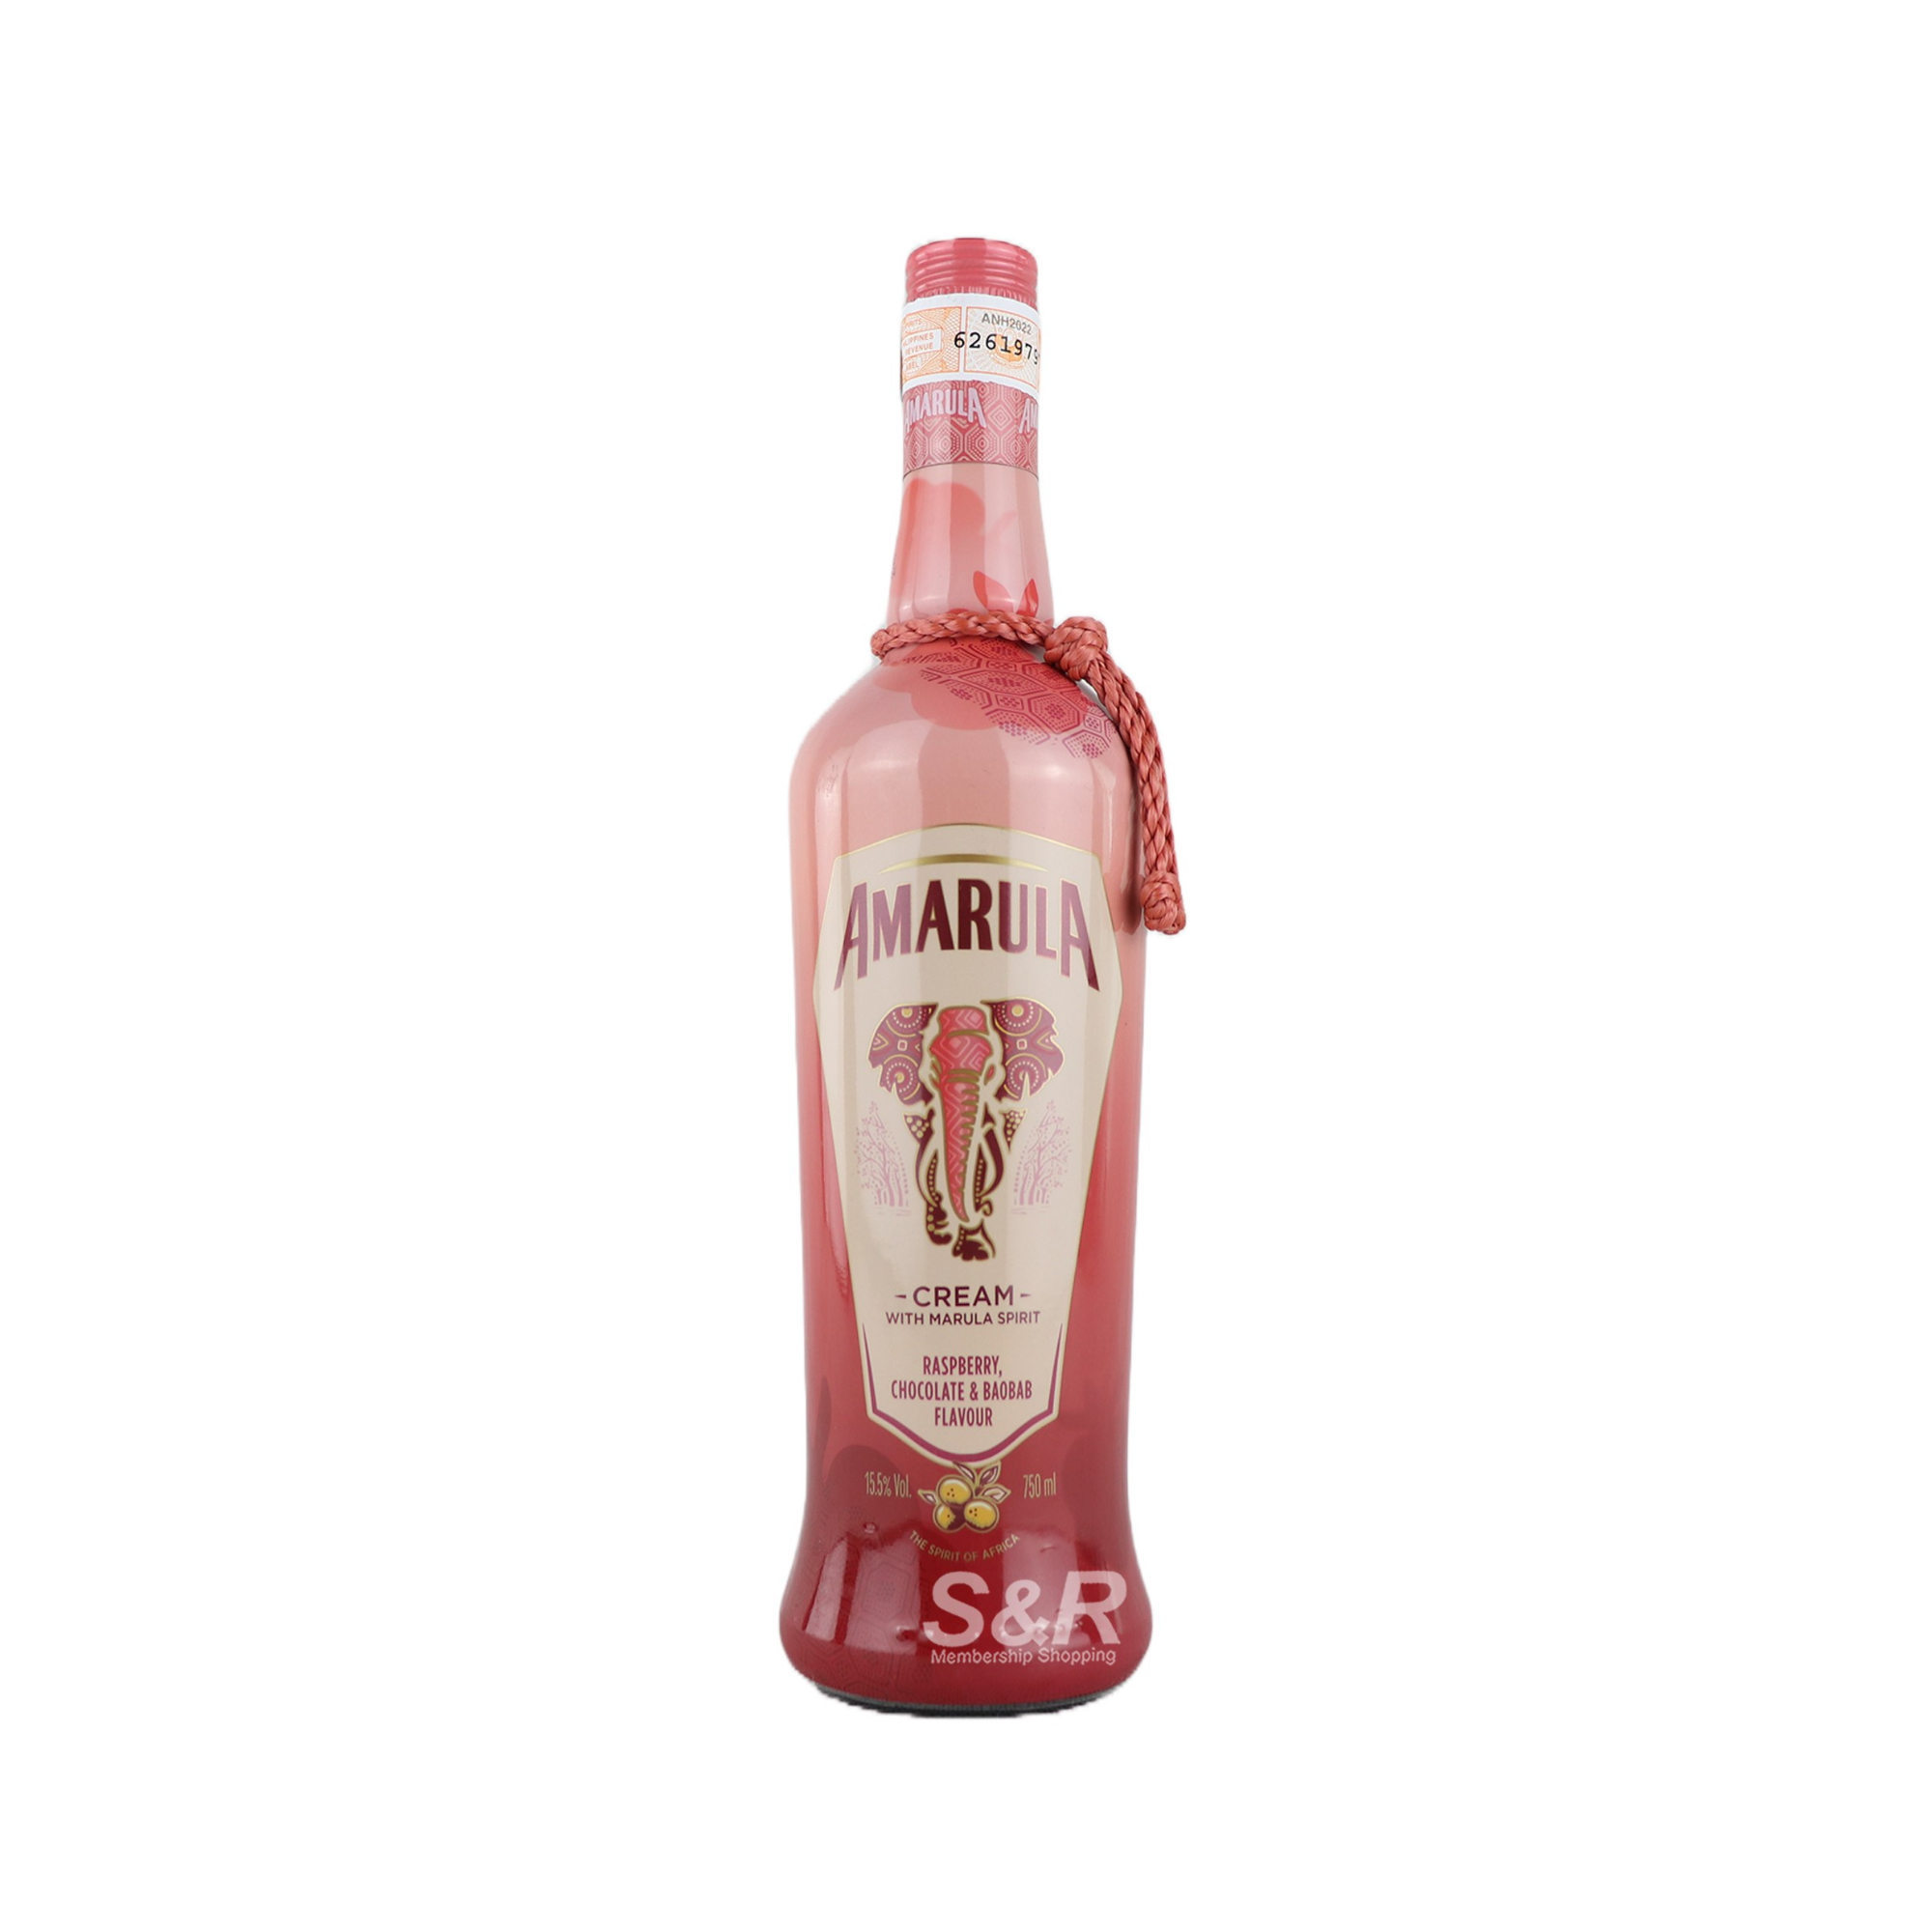 Amarula Raspberry, Chocolate & Liqueur Cream Baobab 750mL